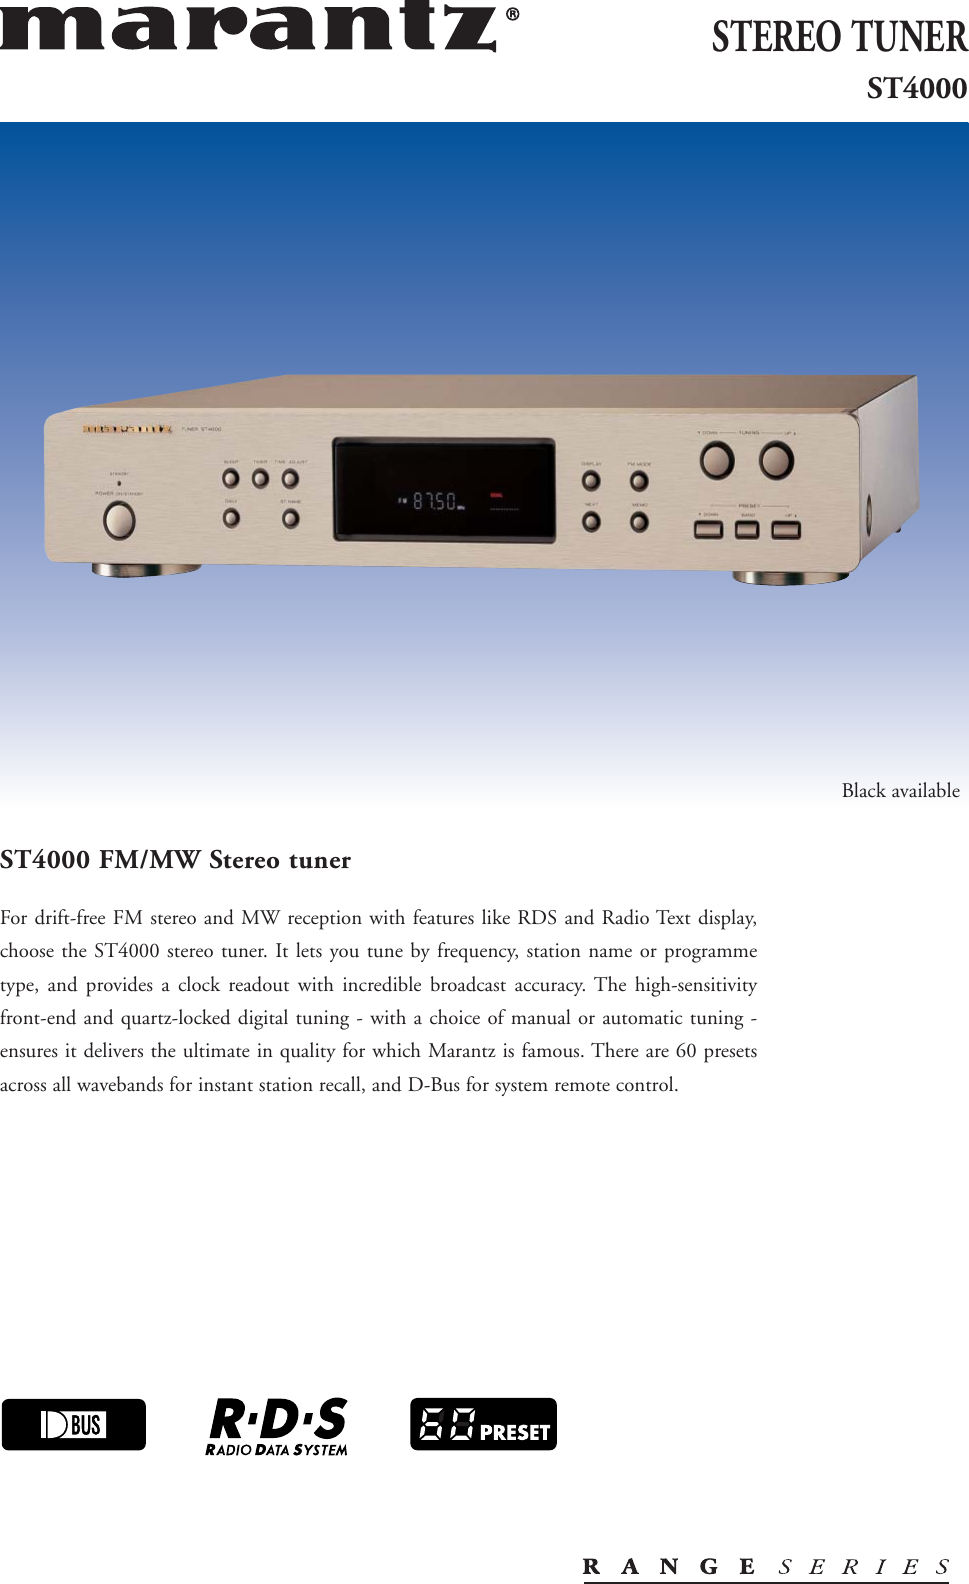 Page 1 of 4 - Marantz Marantz-Stereo-Tuner-St4000-Users-Manual- 6898_ST4000  Marantz-stereo-tuner-st4000-users-manual